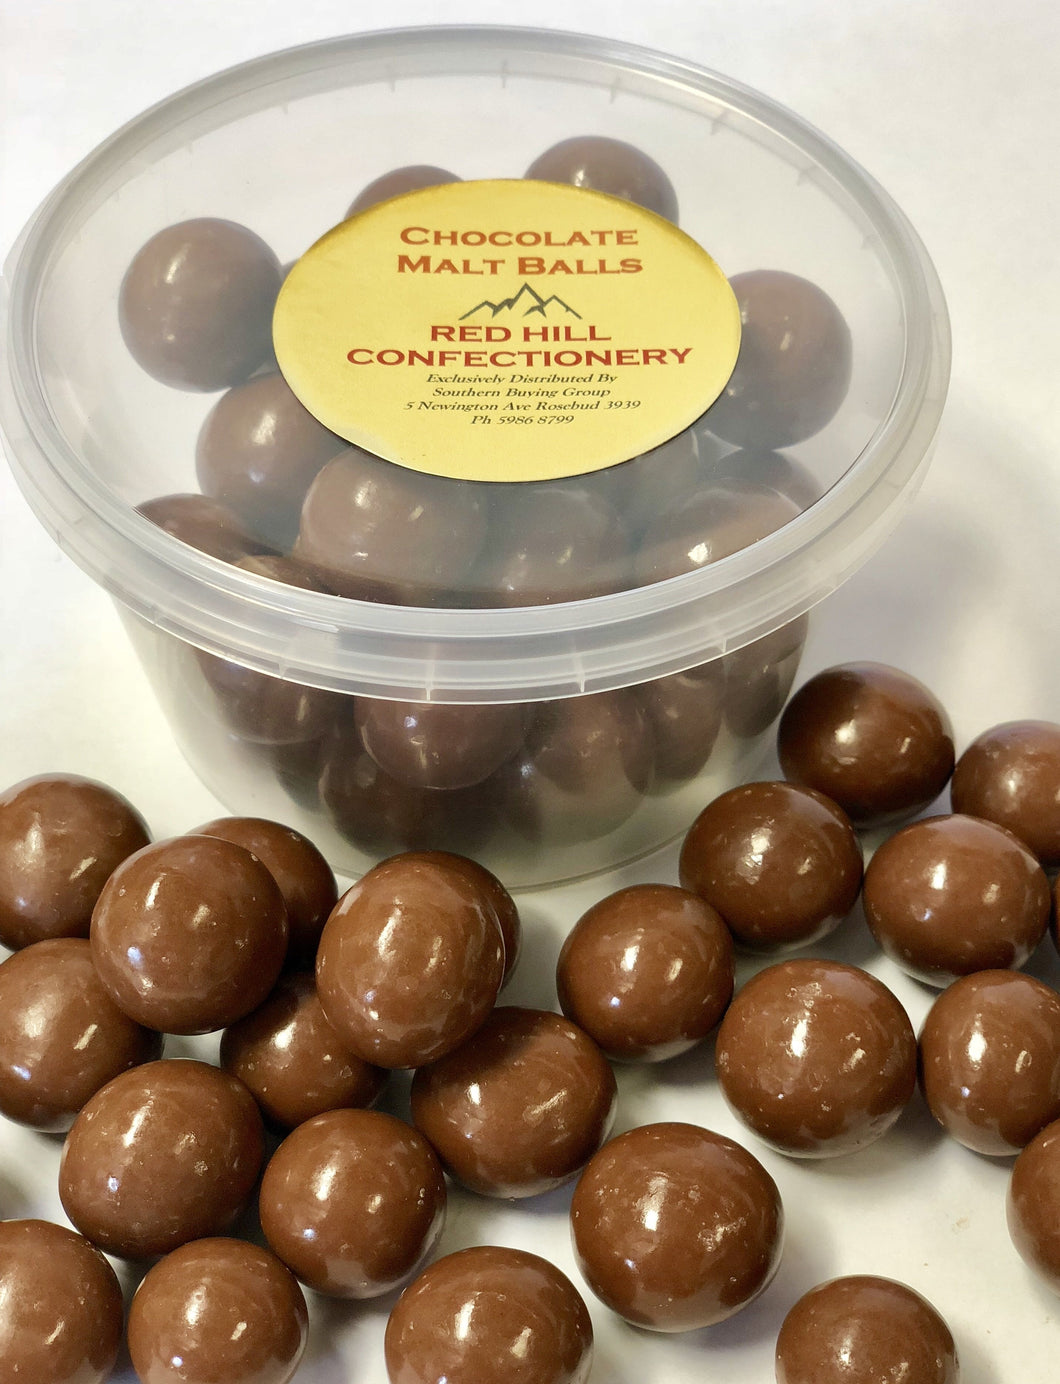 Red Hill Confectionery - Chocolate Malt Balls 200g Tub